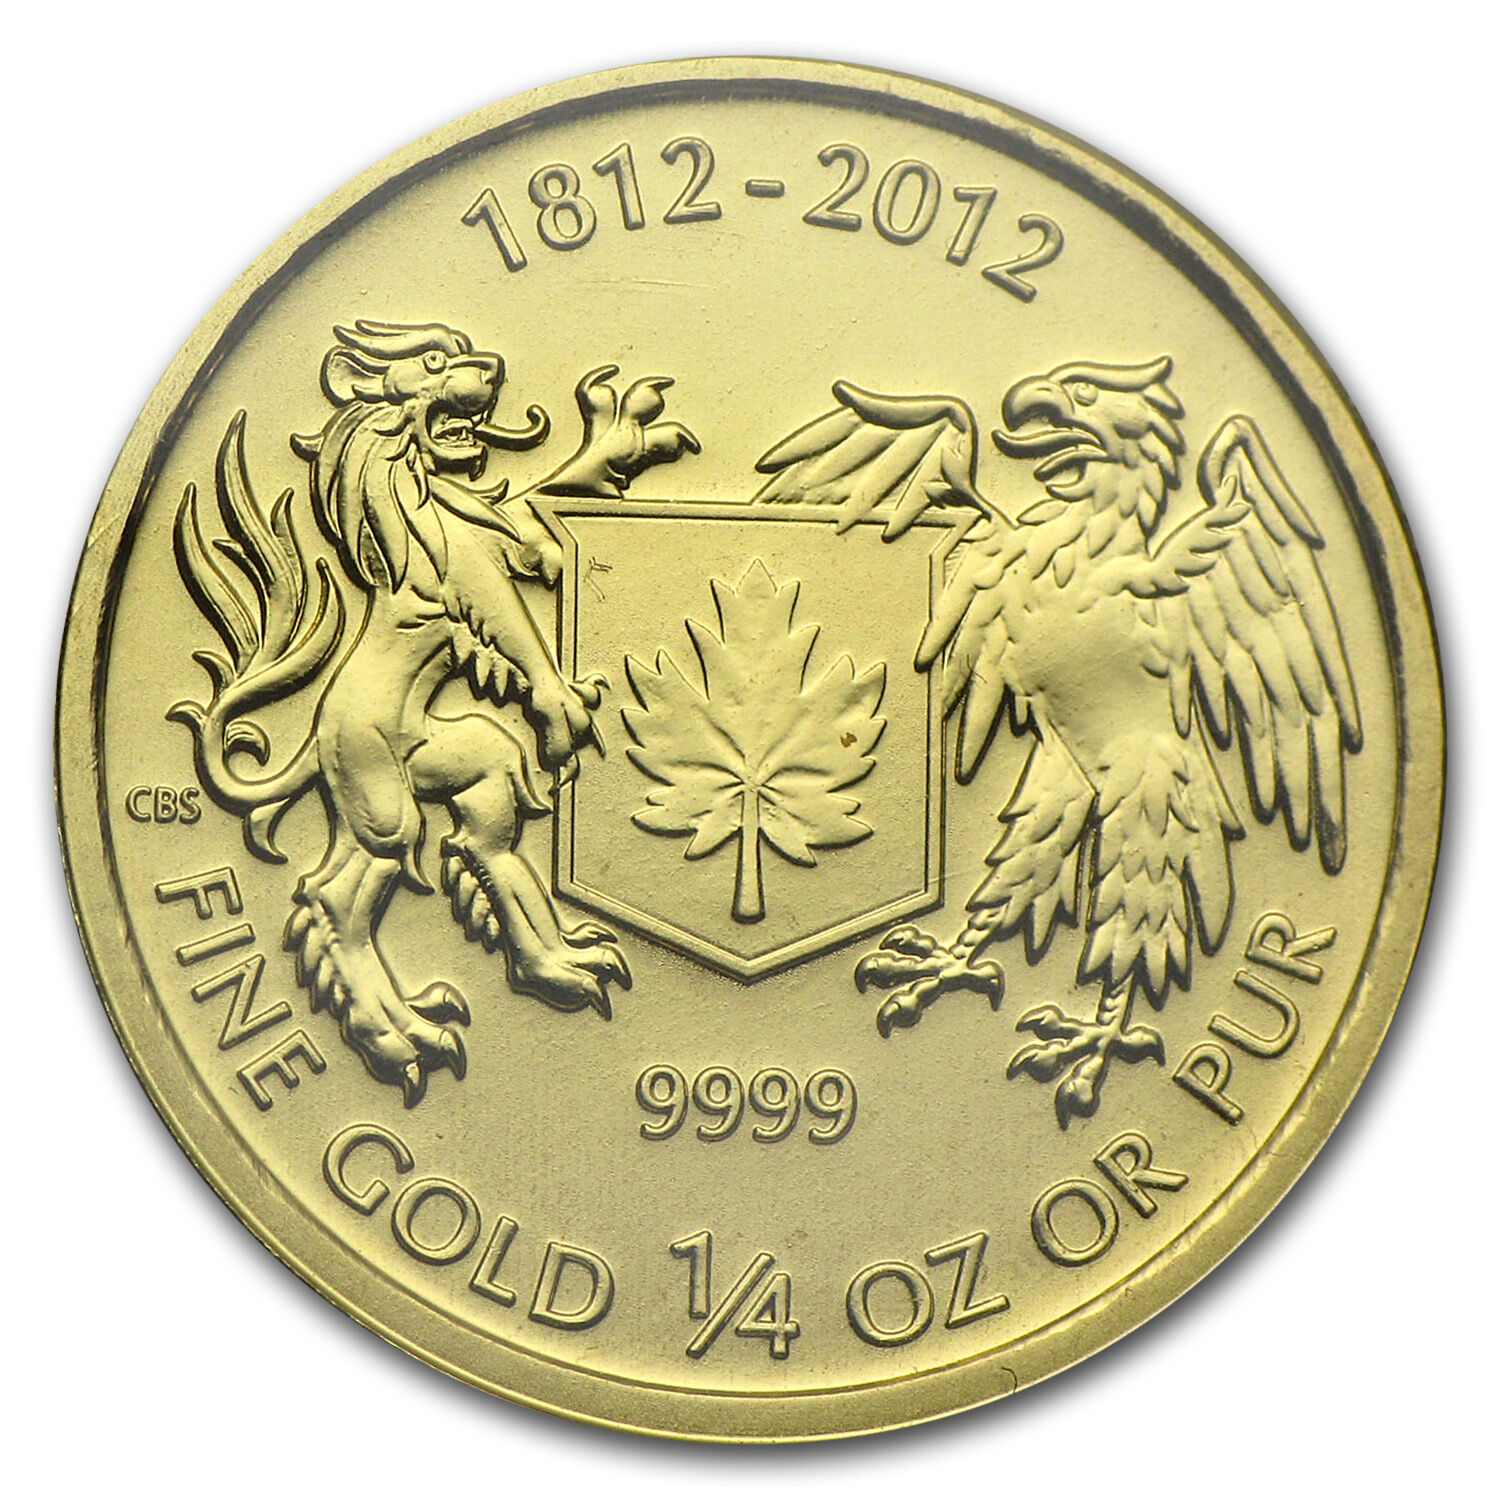 2012 1/4 oz Gold Canadian $10 Coin - War of 1812 - SKU #78440